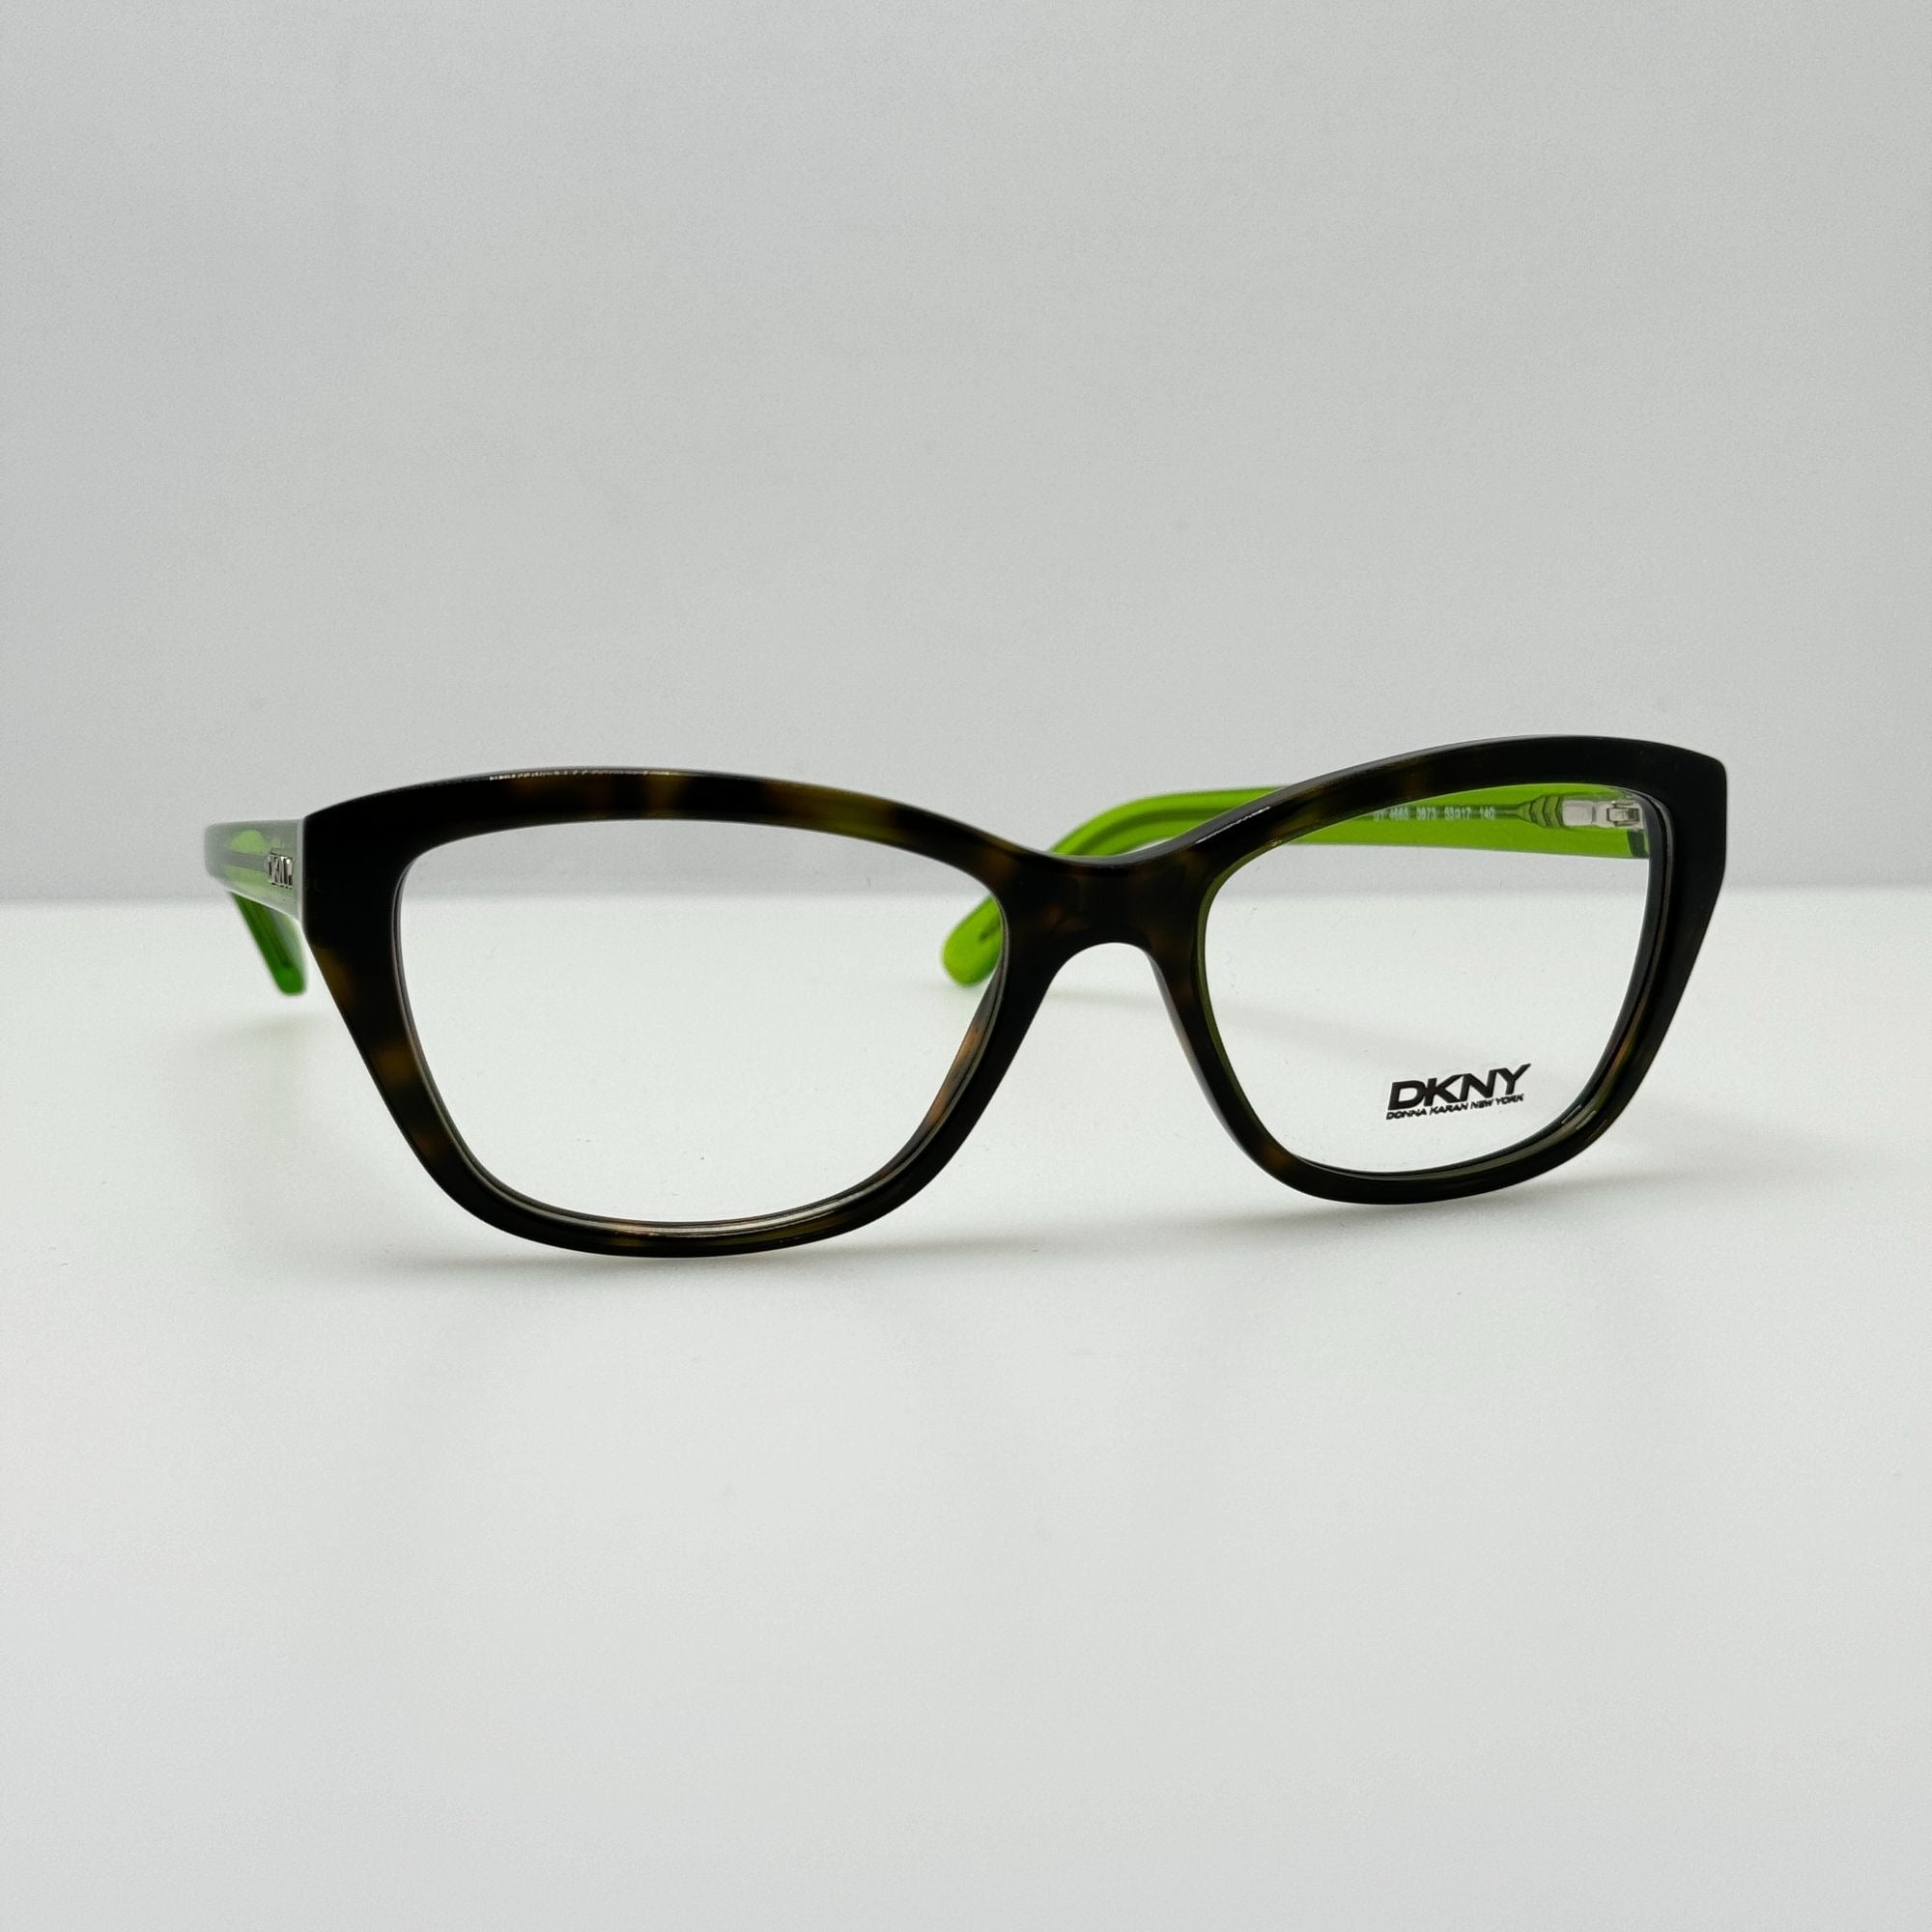 DKNY-Donna-Karan-Eye-Glasses-Eyeglasses-Frames-Dy-4665-3673-53-17-140-Sunglasses